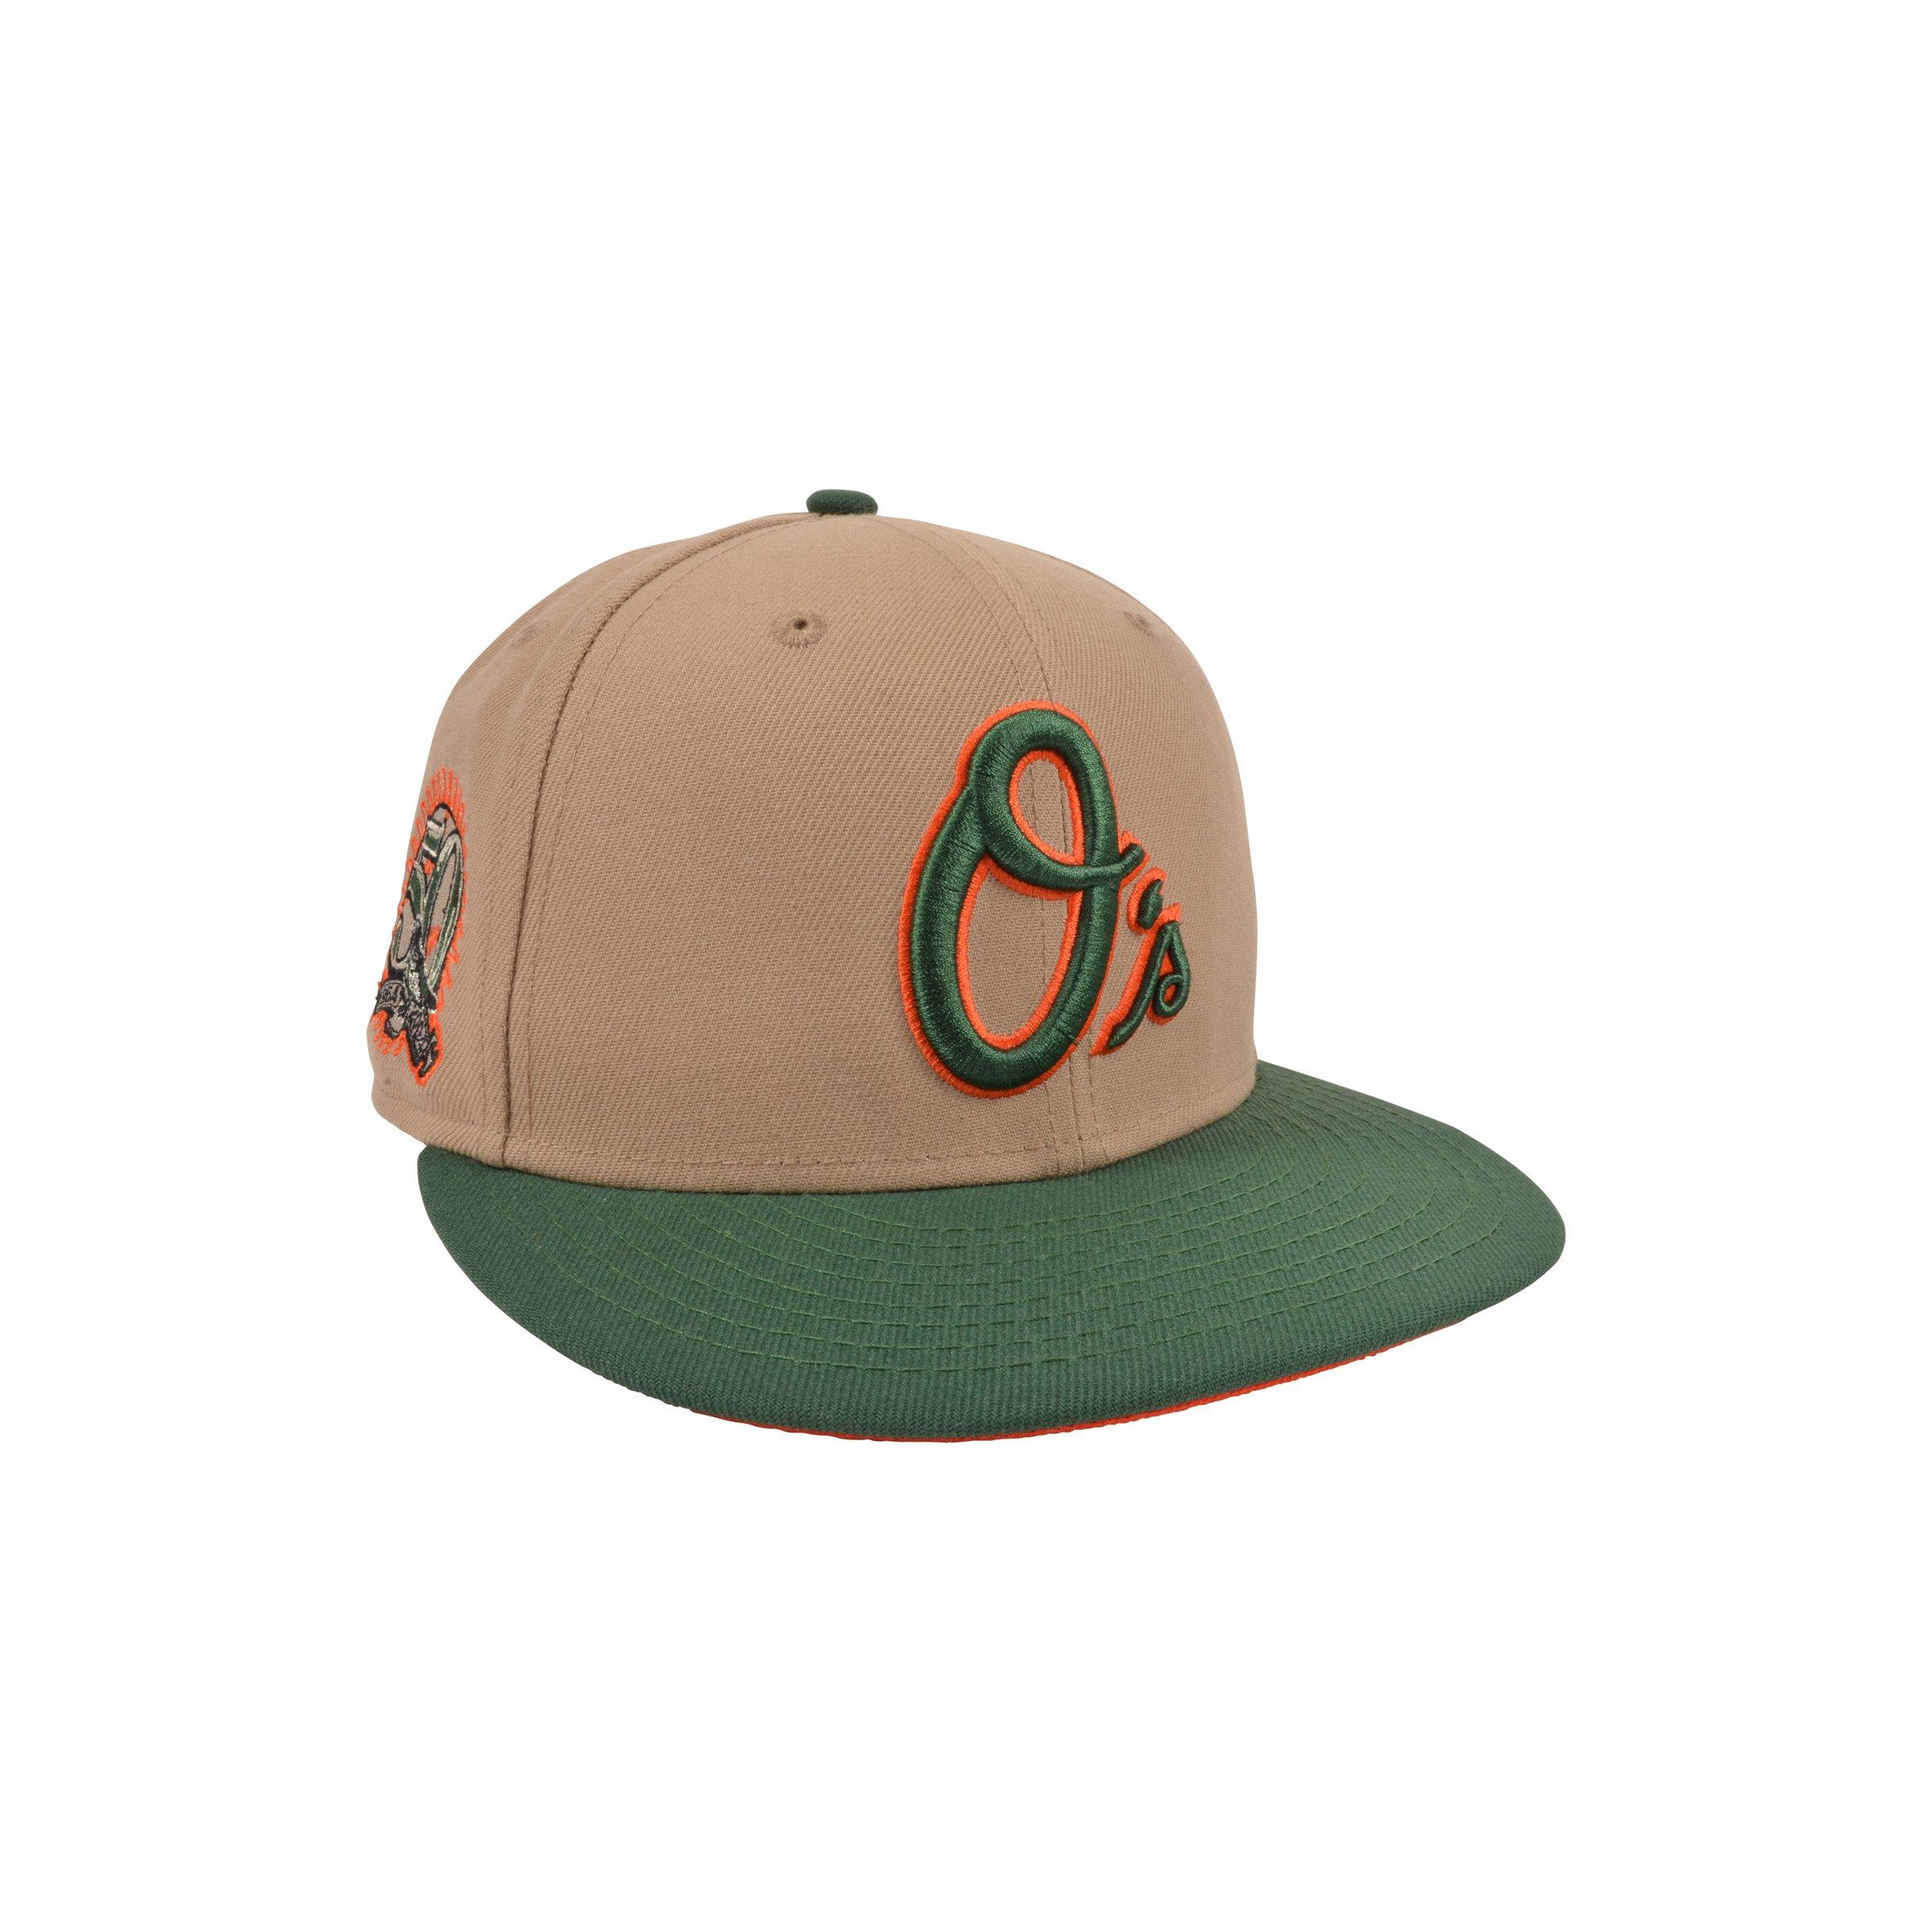 Baltimore Orioles Hat – The Wicker Bee